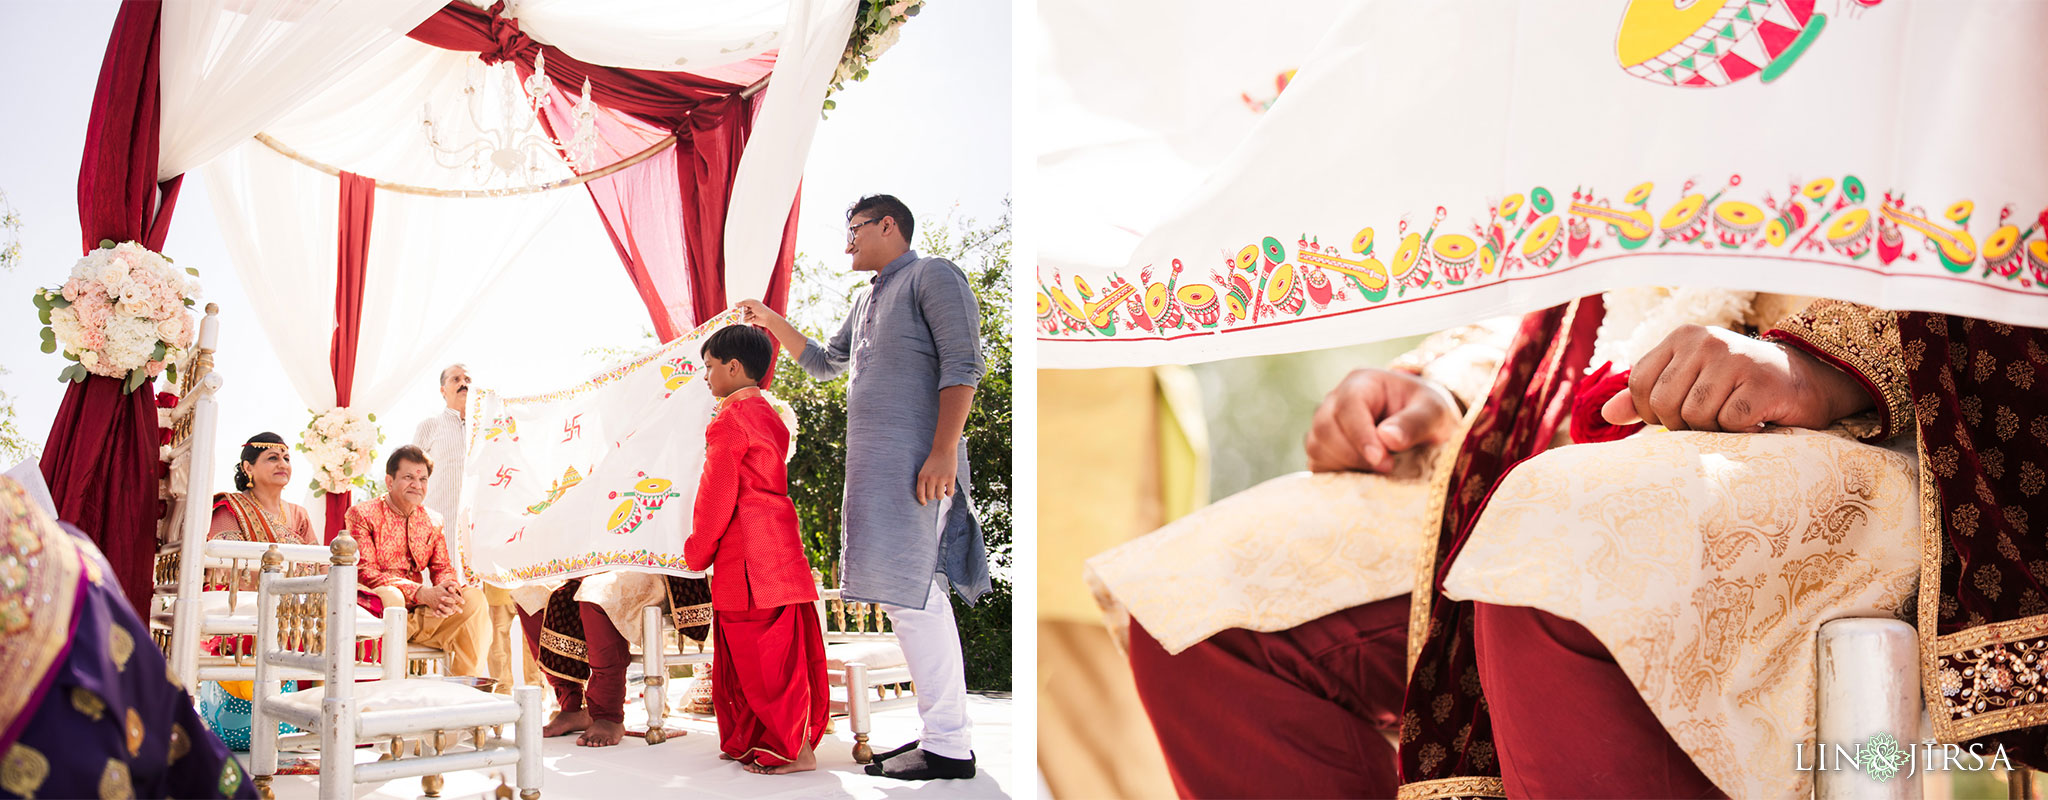 25 sheraton carlsbad resort indian wedding photography